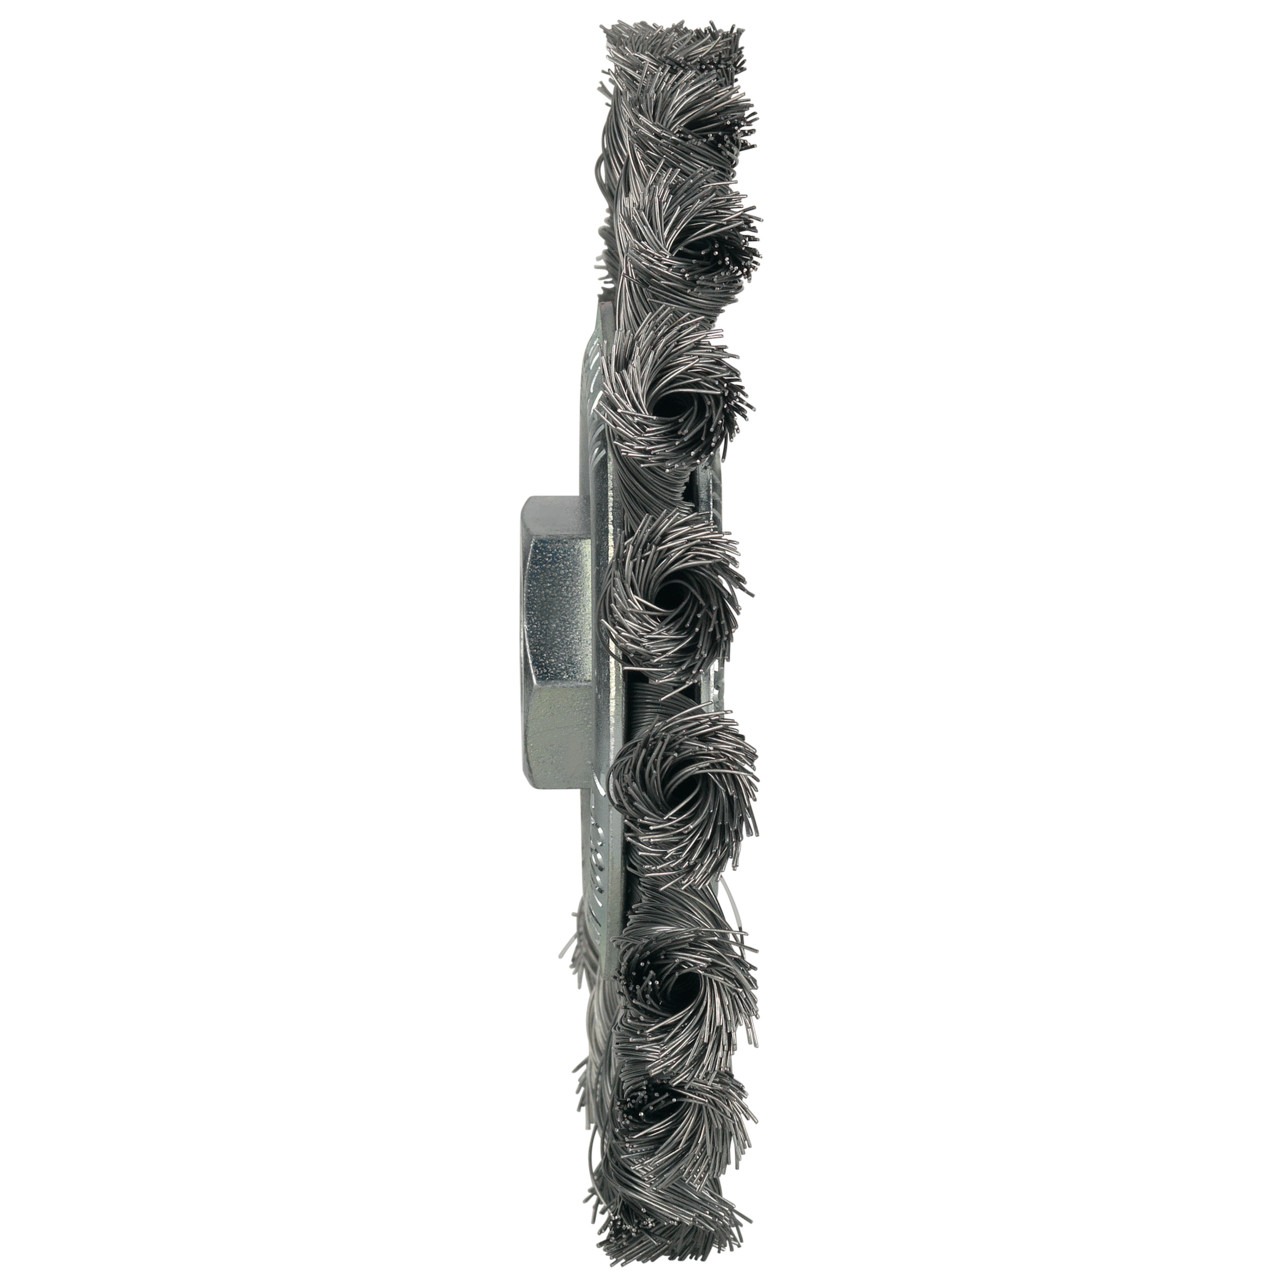 Tyrolit Cepillos para ruedas DxAxLxH 100x11x22x16 Para acero, forma: 1RDZ - (cepillo para ruedas), Art. 34275969